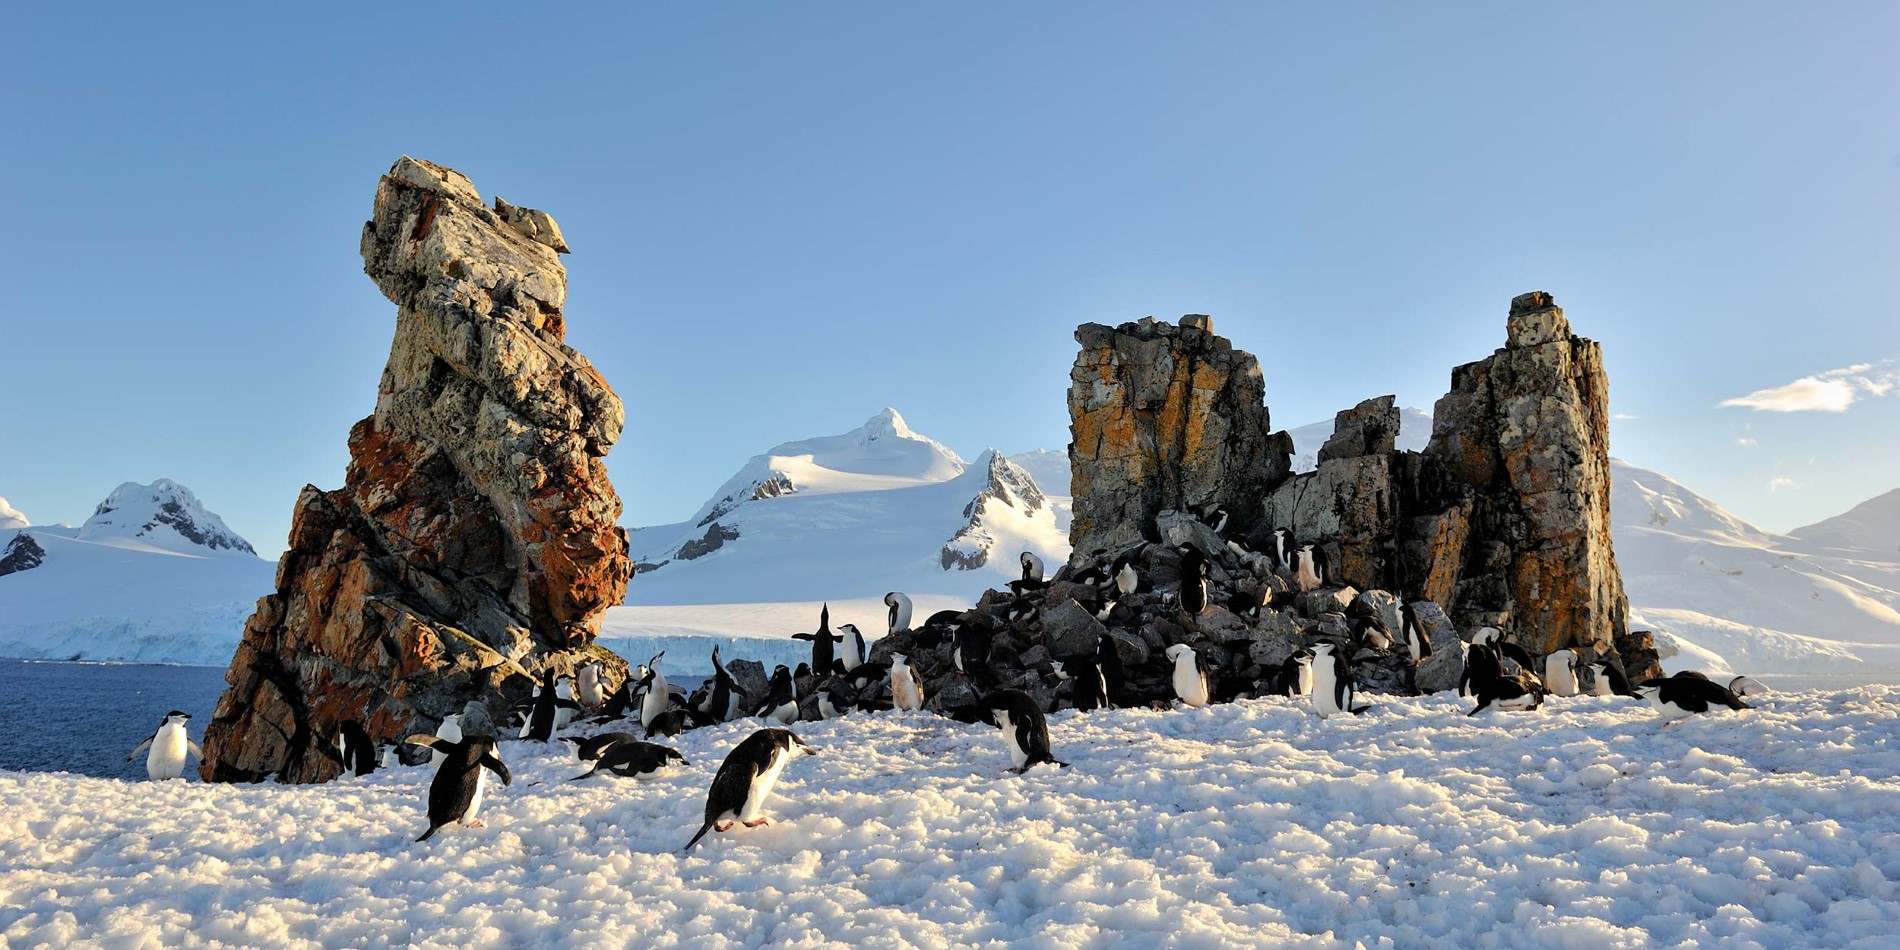 Pingviner i sitt naturlige miljø